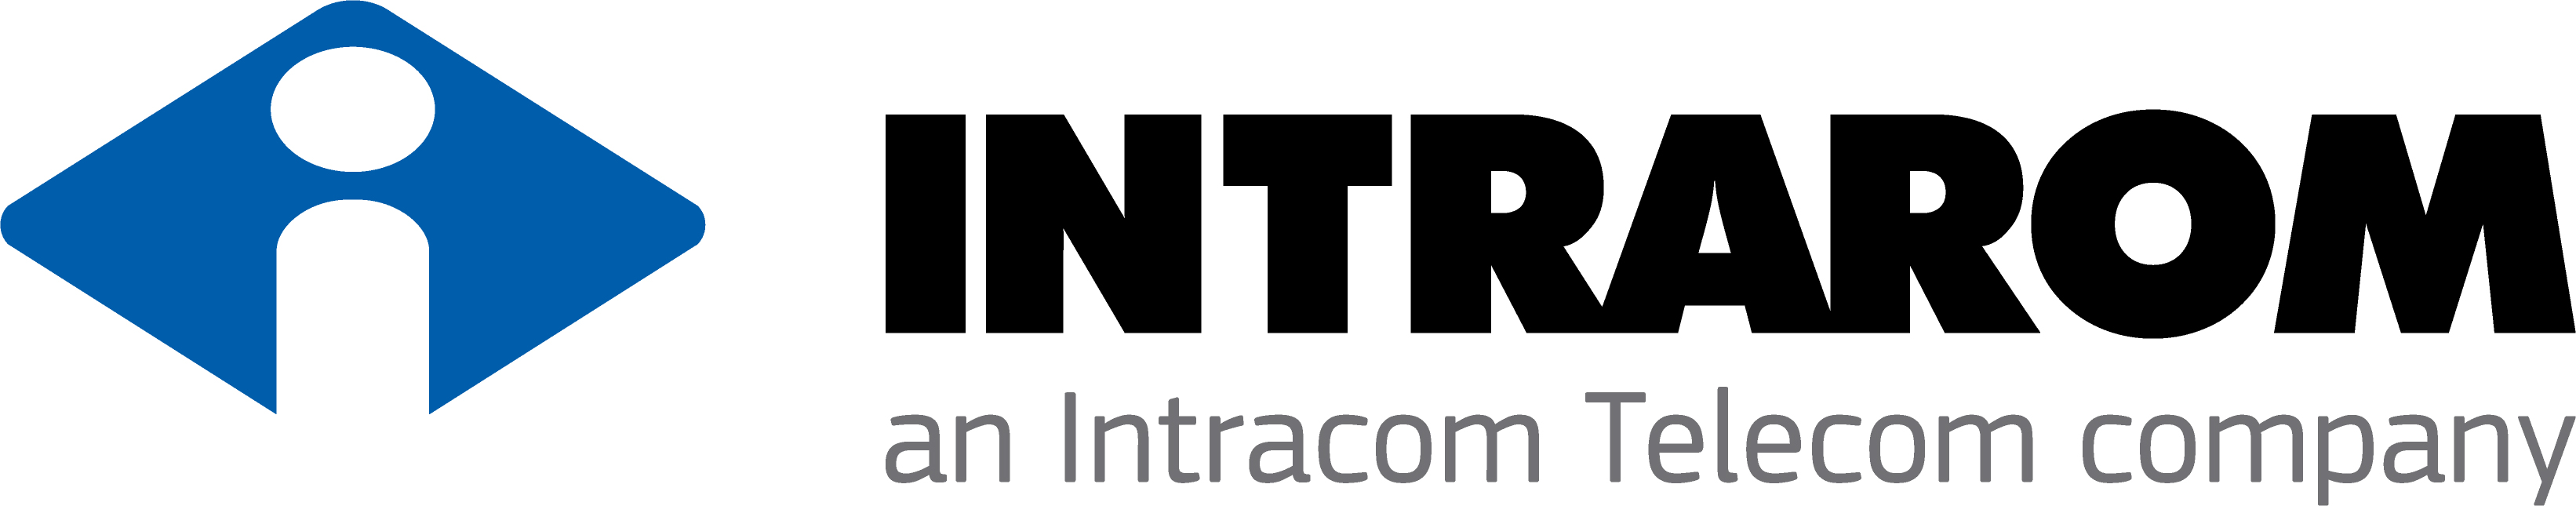 INTRAROM_logo_tagline